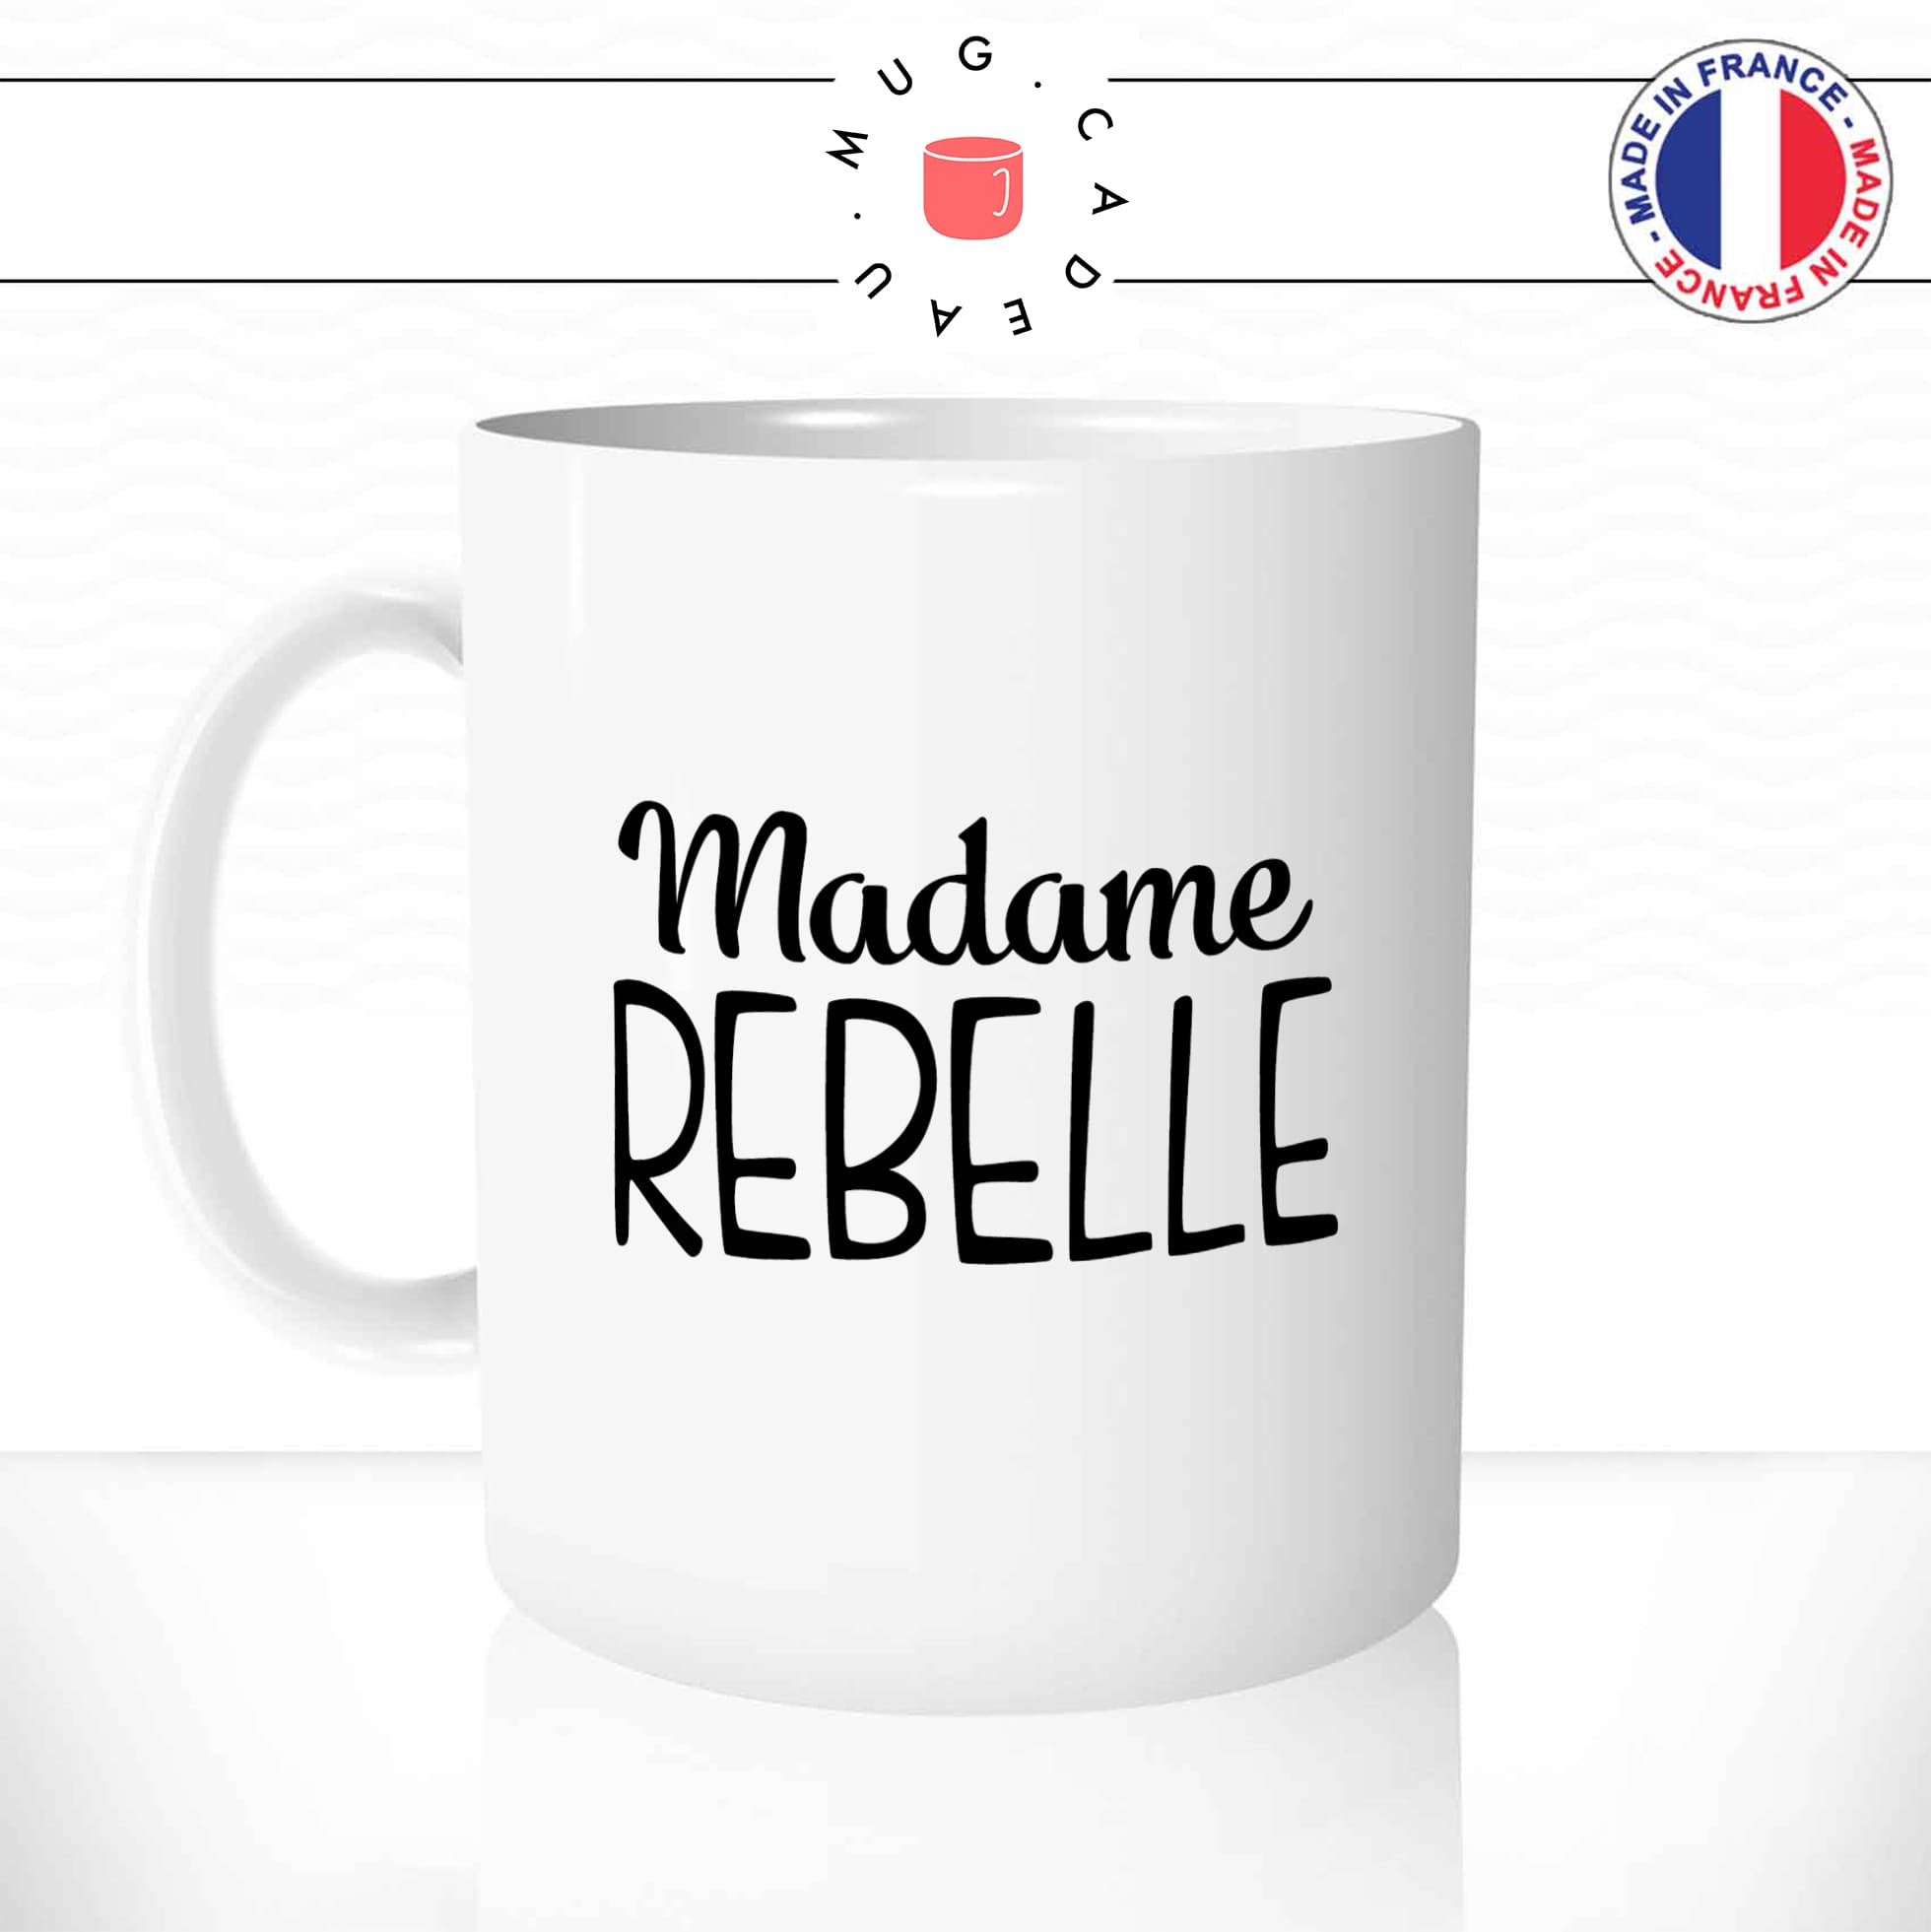 mug-tasse-madame-rebelle-amie-femme-travail-humour-bureau-idée-cadeau-original-fun-café-thé-tasse-personnalisée